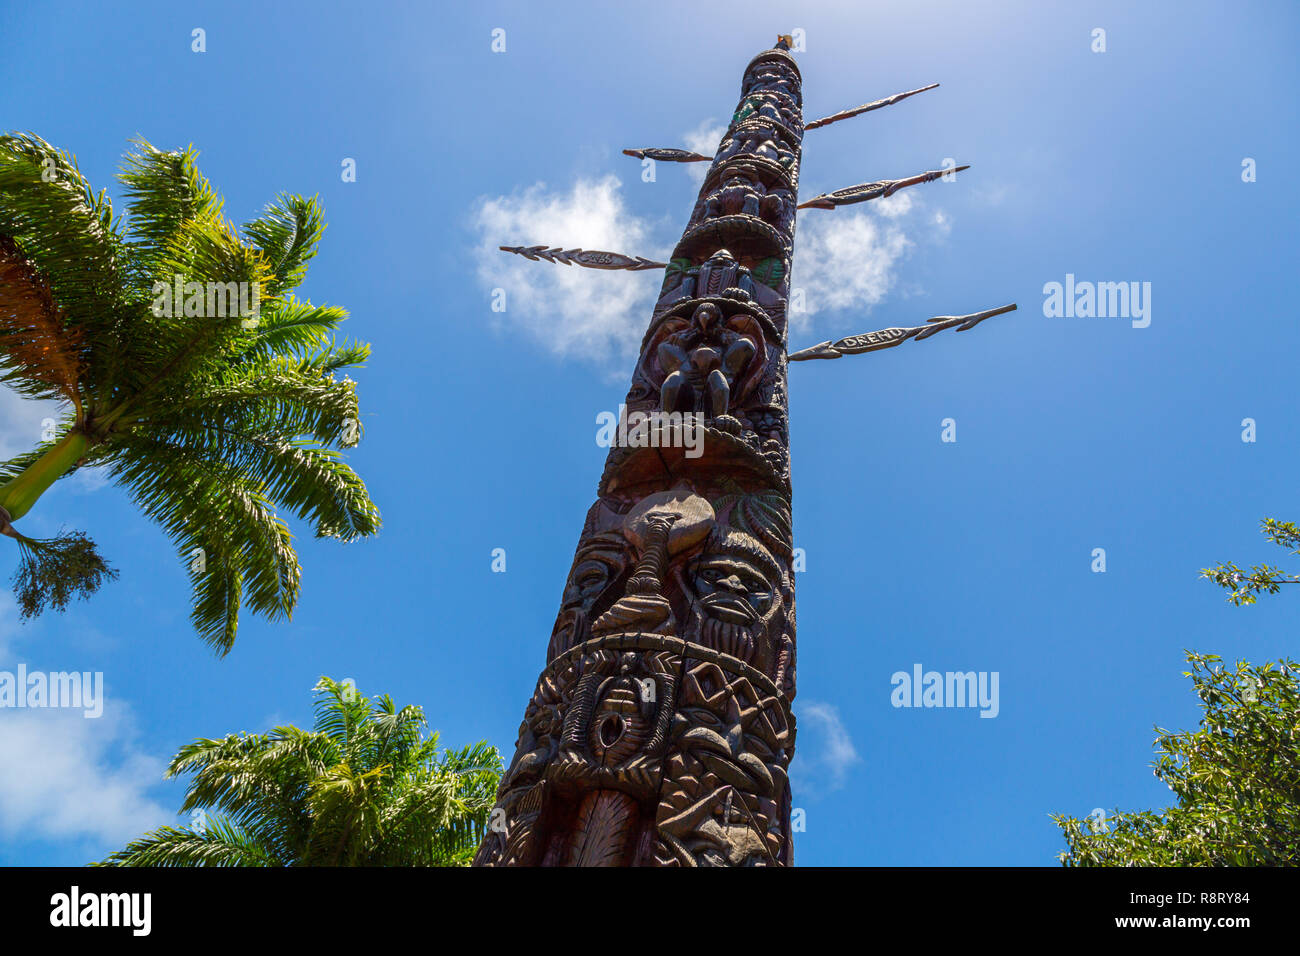 Noumea, New Caledonia. Mwâ Ka (Mwa Ka, Big House or House of Man), monumental 12-meter kanak totem pole erected in city centre Noumea, commemorating French annexation of New Caledonia. Stock Photo